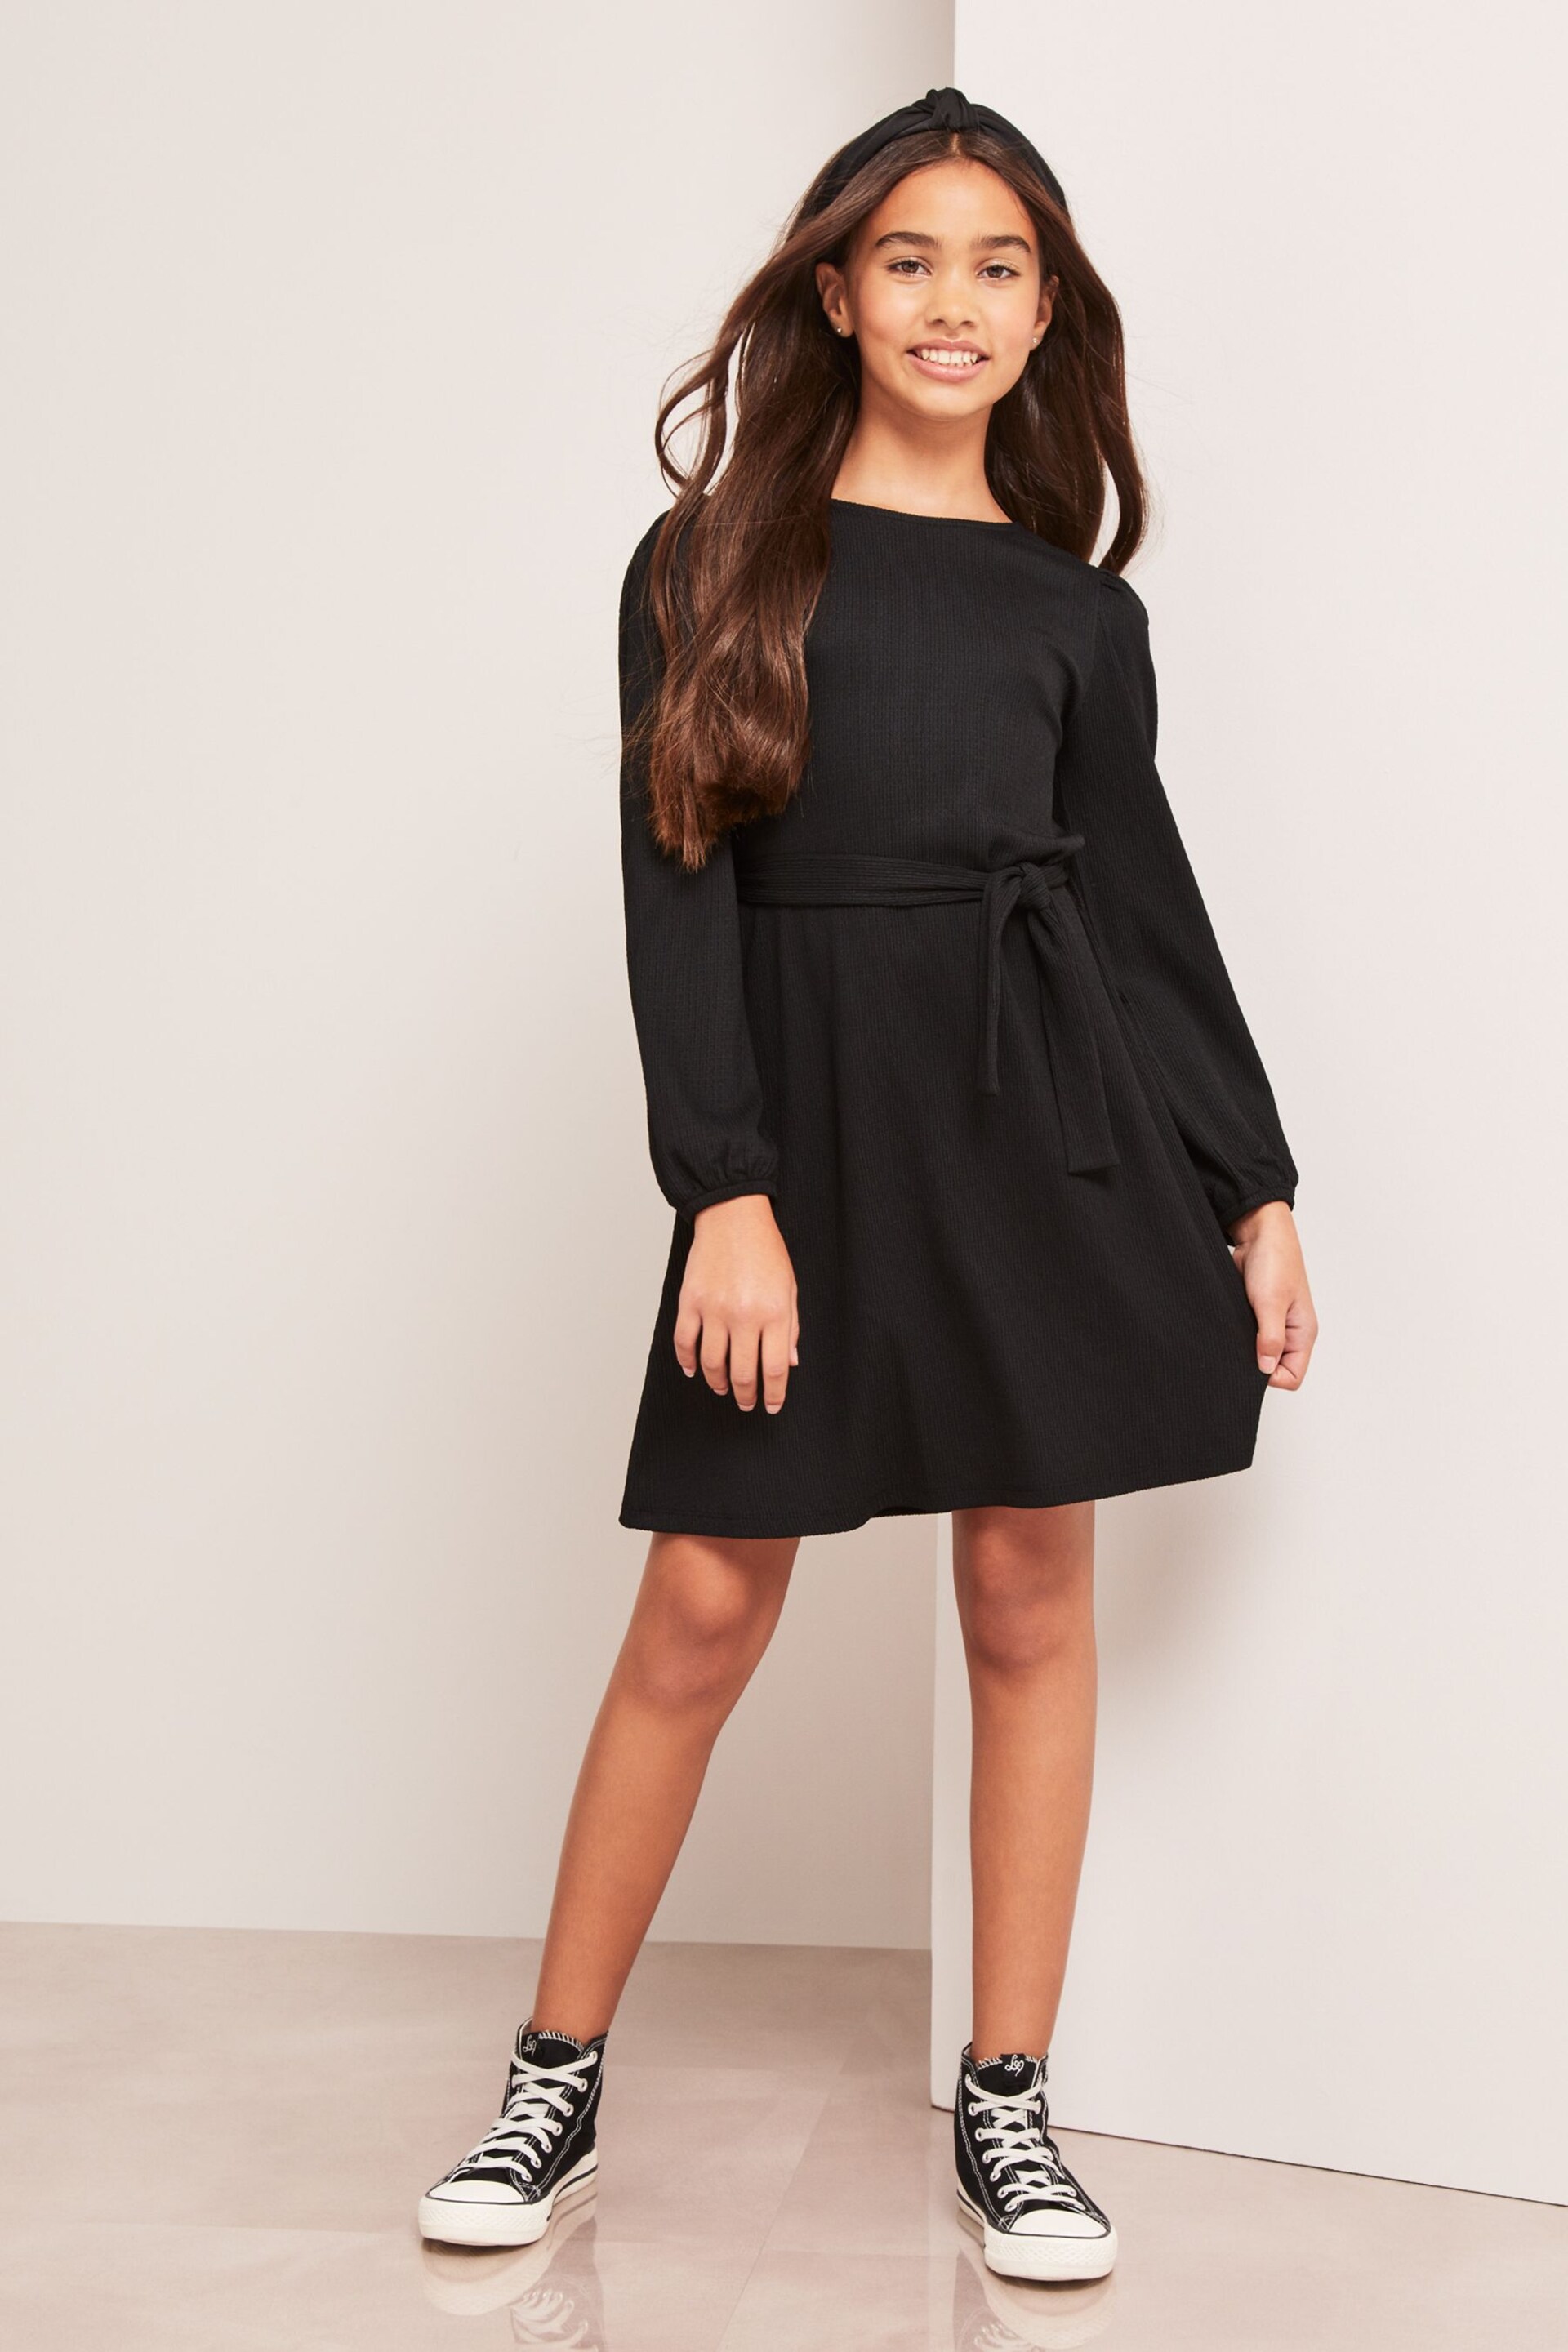 Lipsy Black Crinkle Jersey Long Sleeve Dress - Image 2 of 4